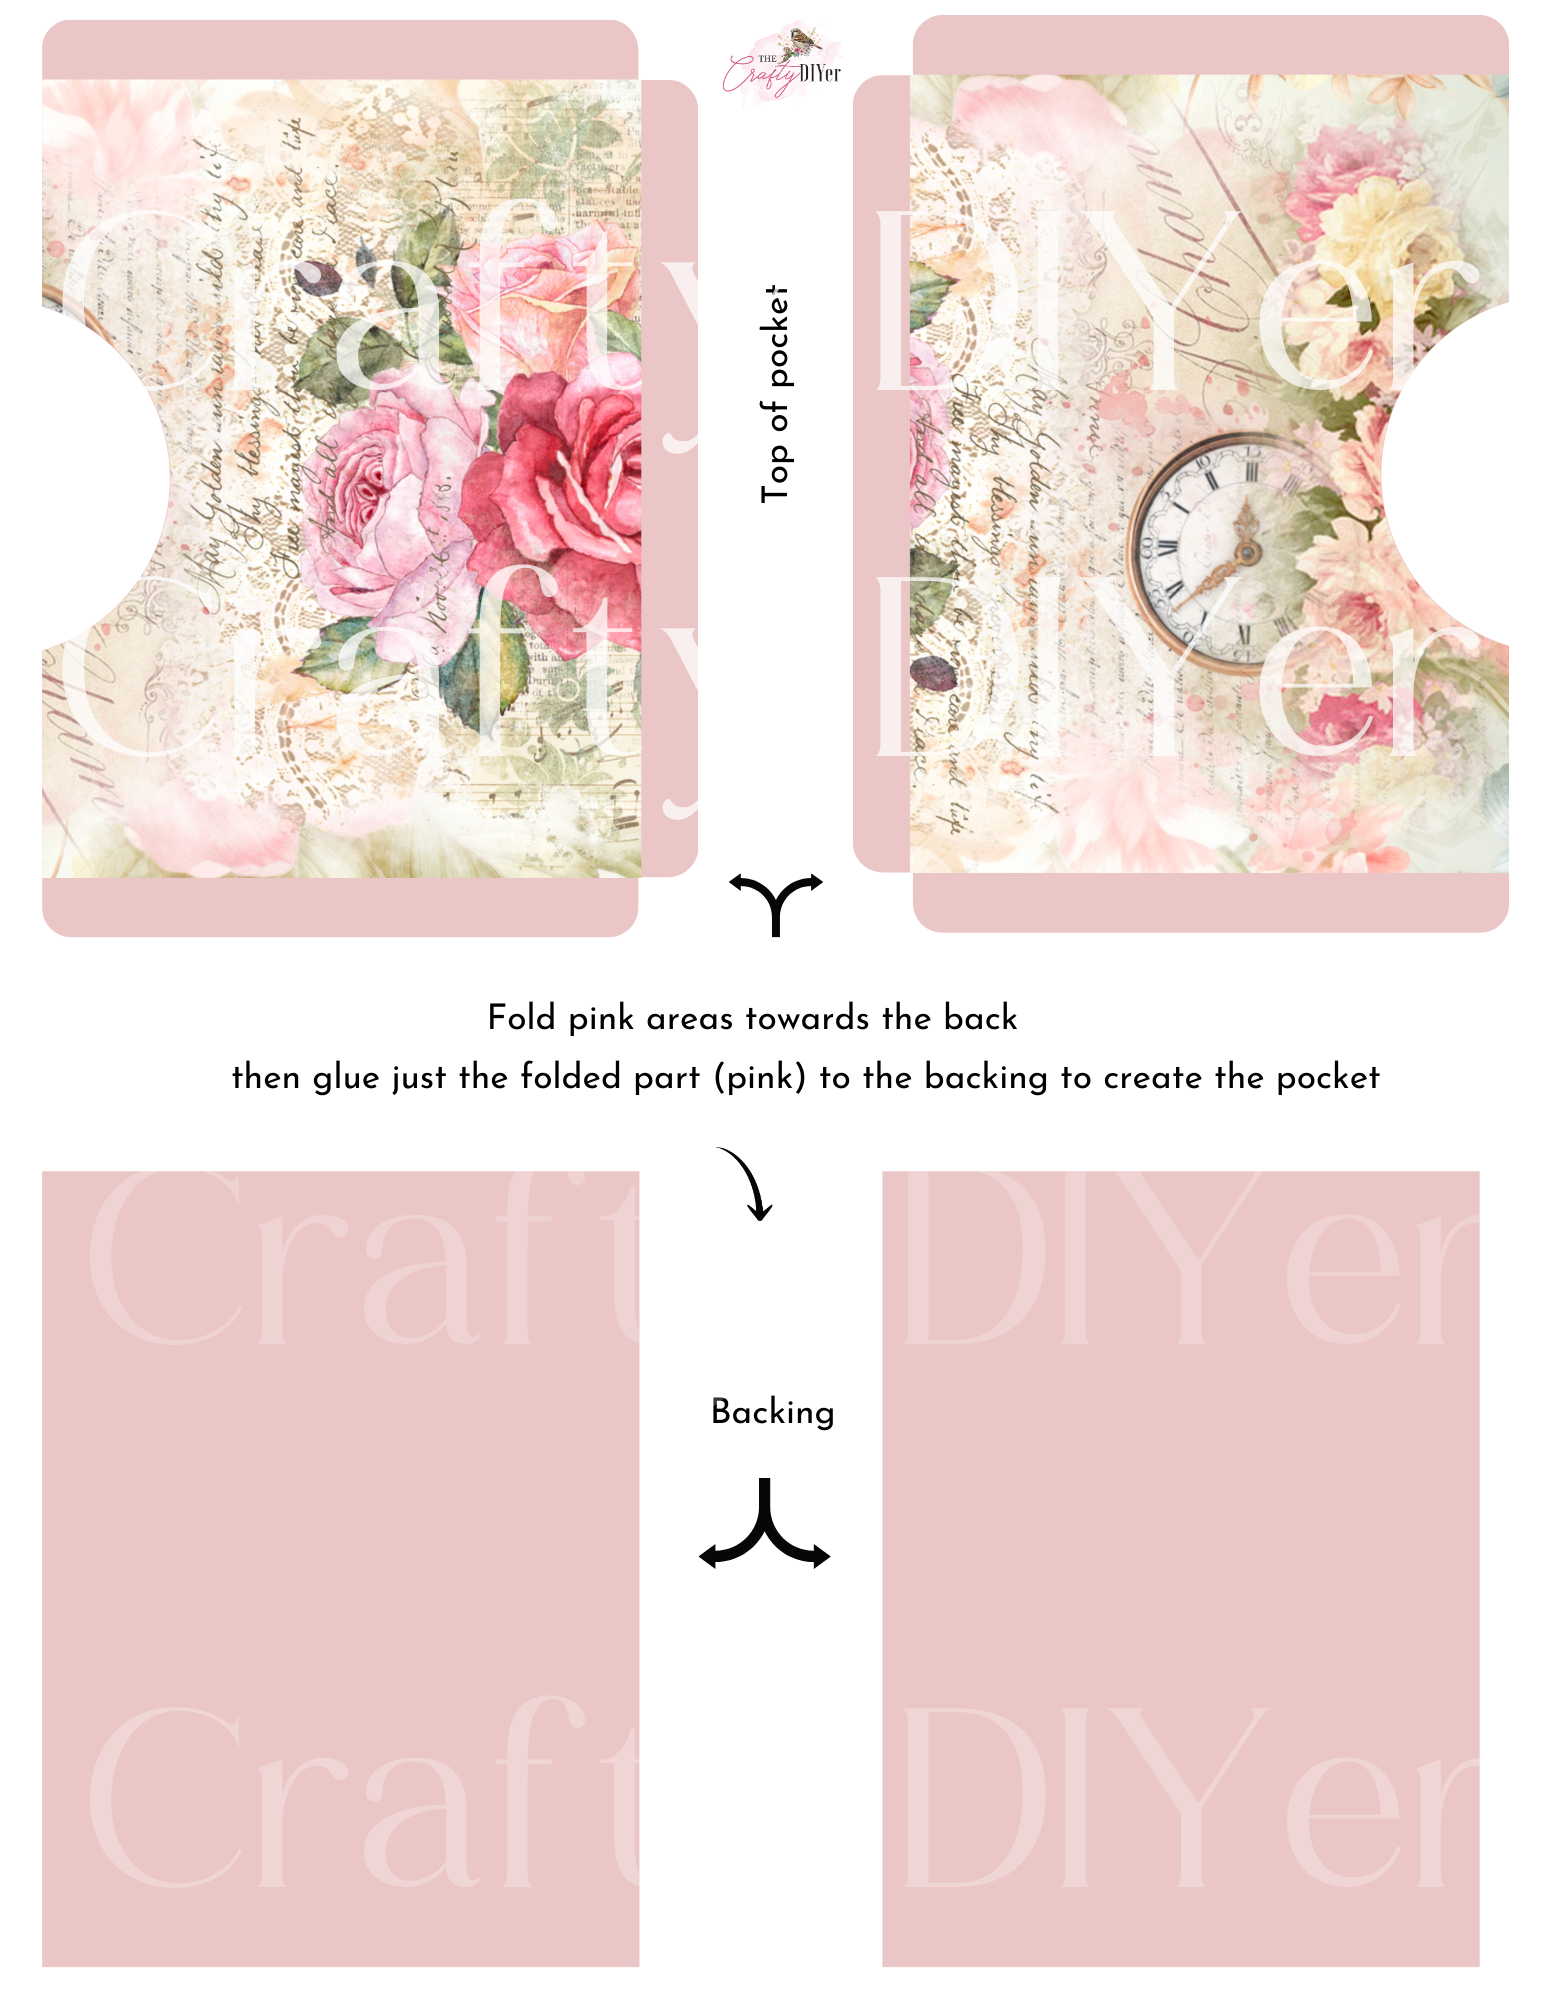 Floral Tea Party Digital Printables